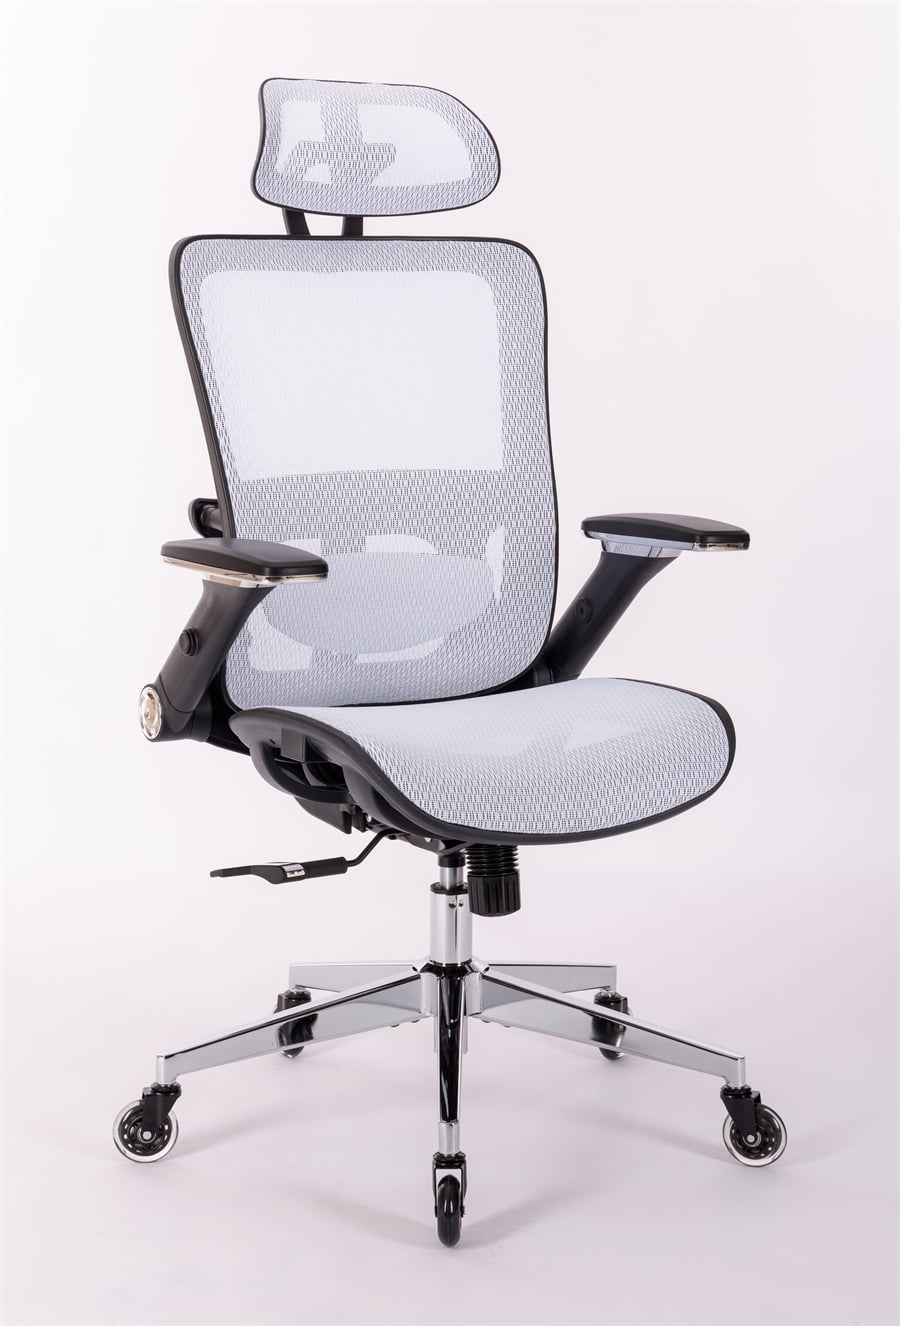 4D Fully Adjustable Ergonomic Office Chair OC9B